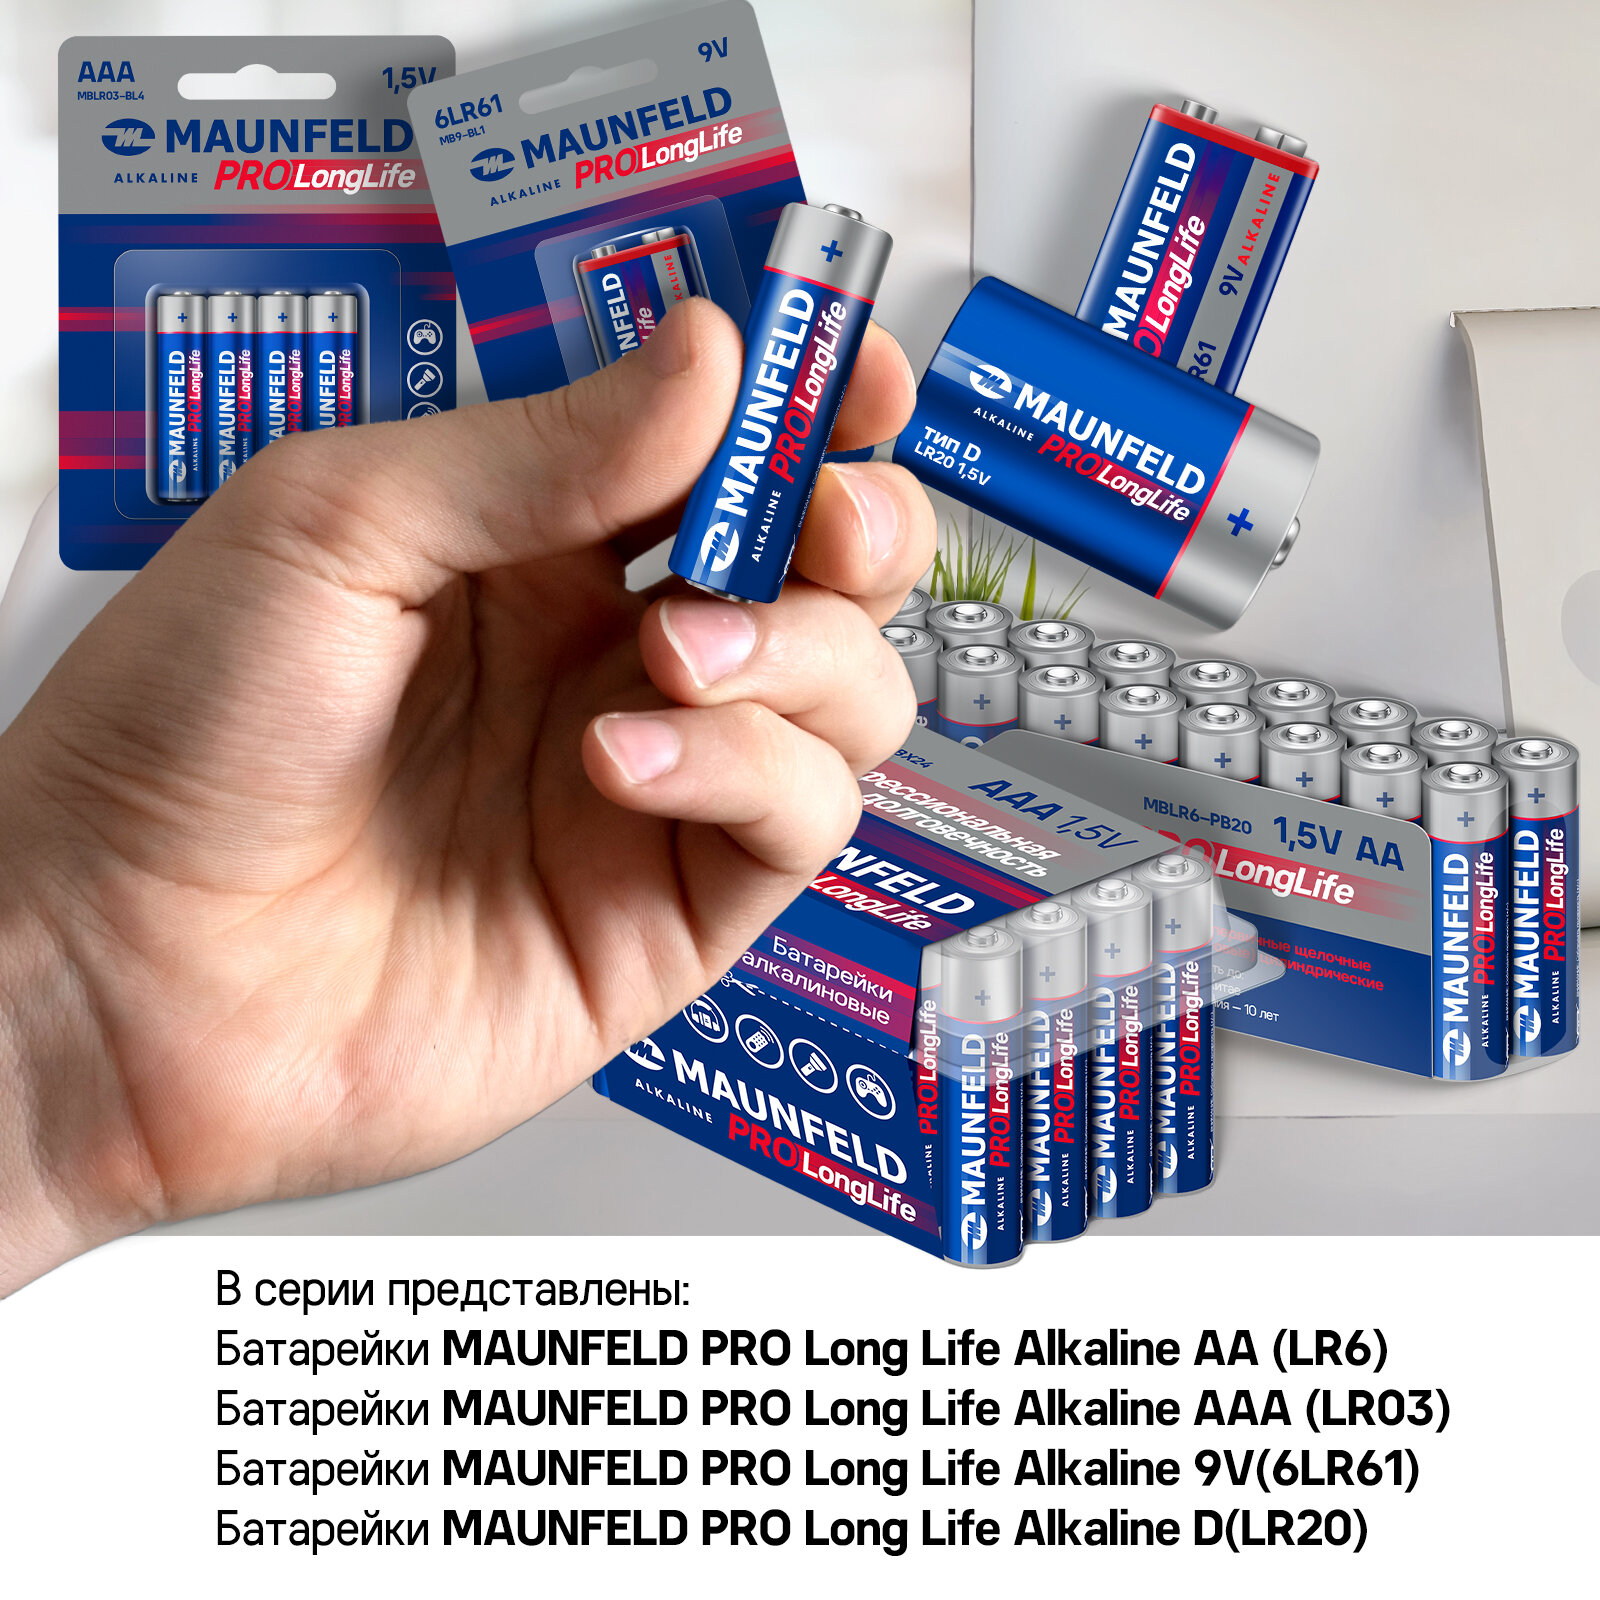 Батарейки MAUNFELD PRO Long Life Alkaline AA (LR6) MBLR6-PB10, упаковка 10 шт.